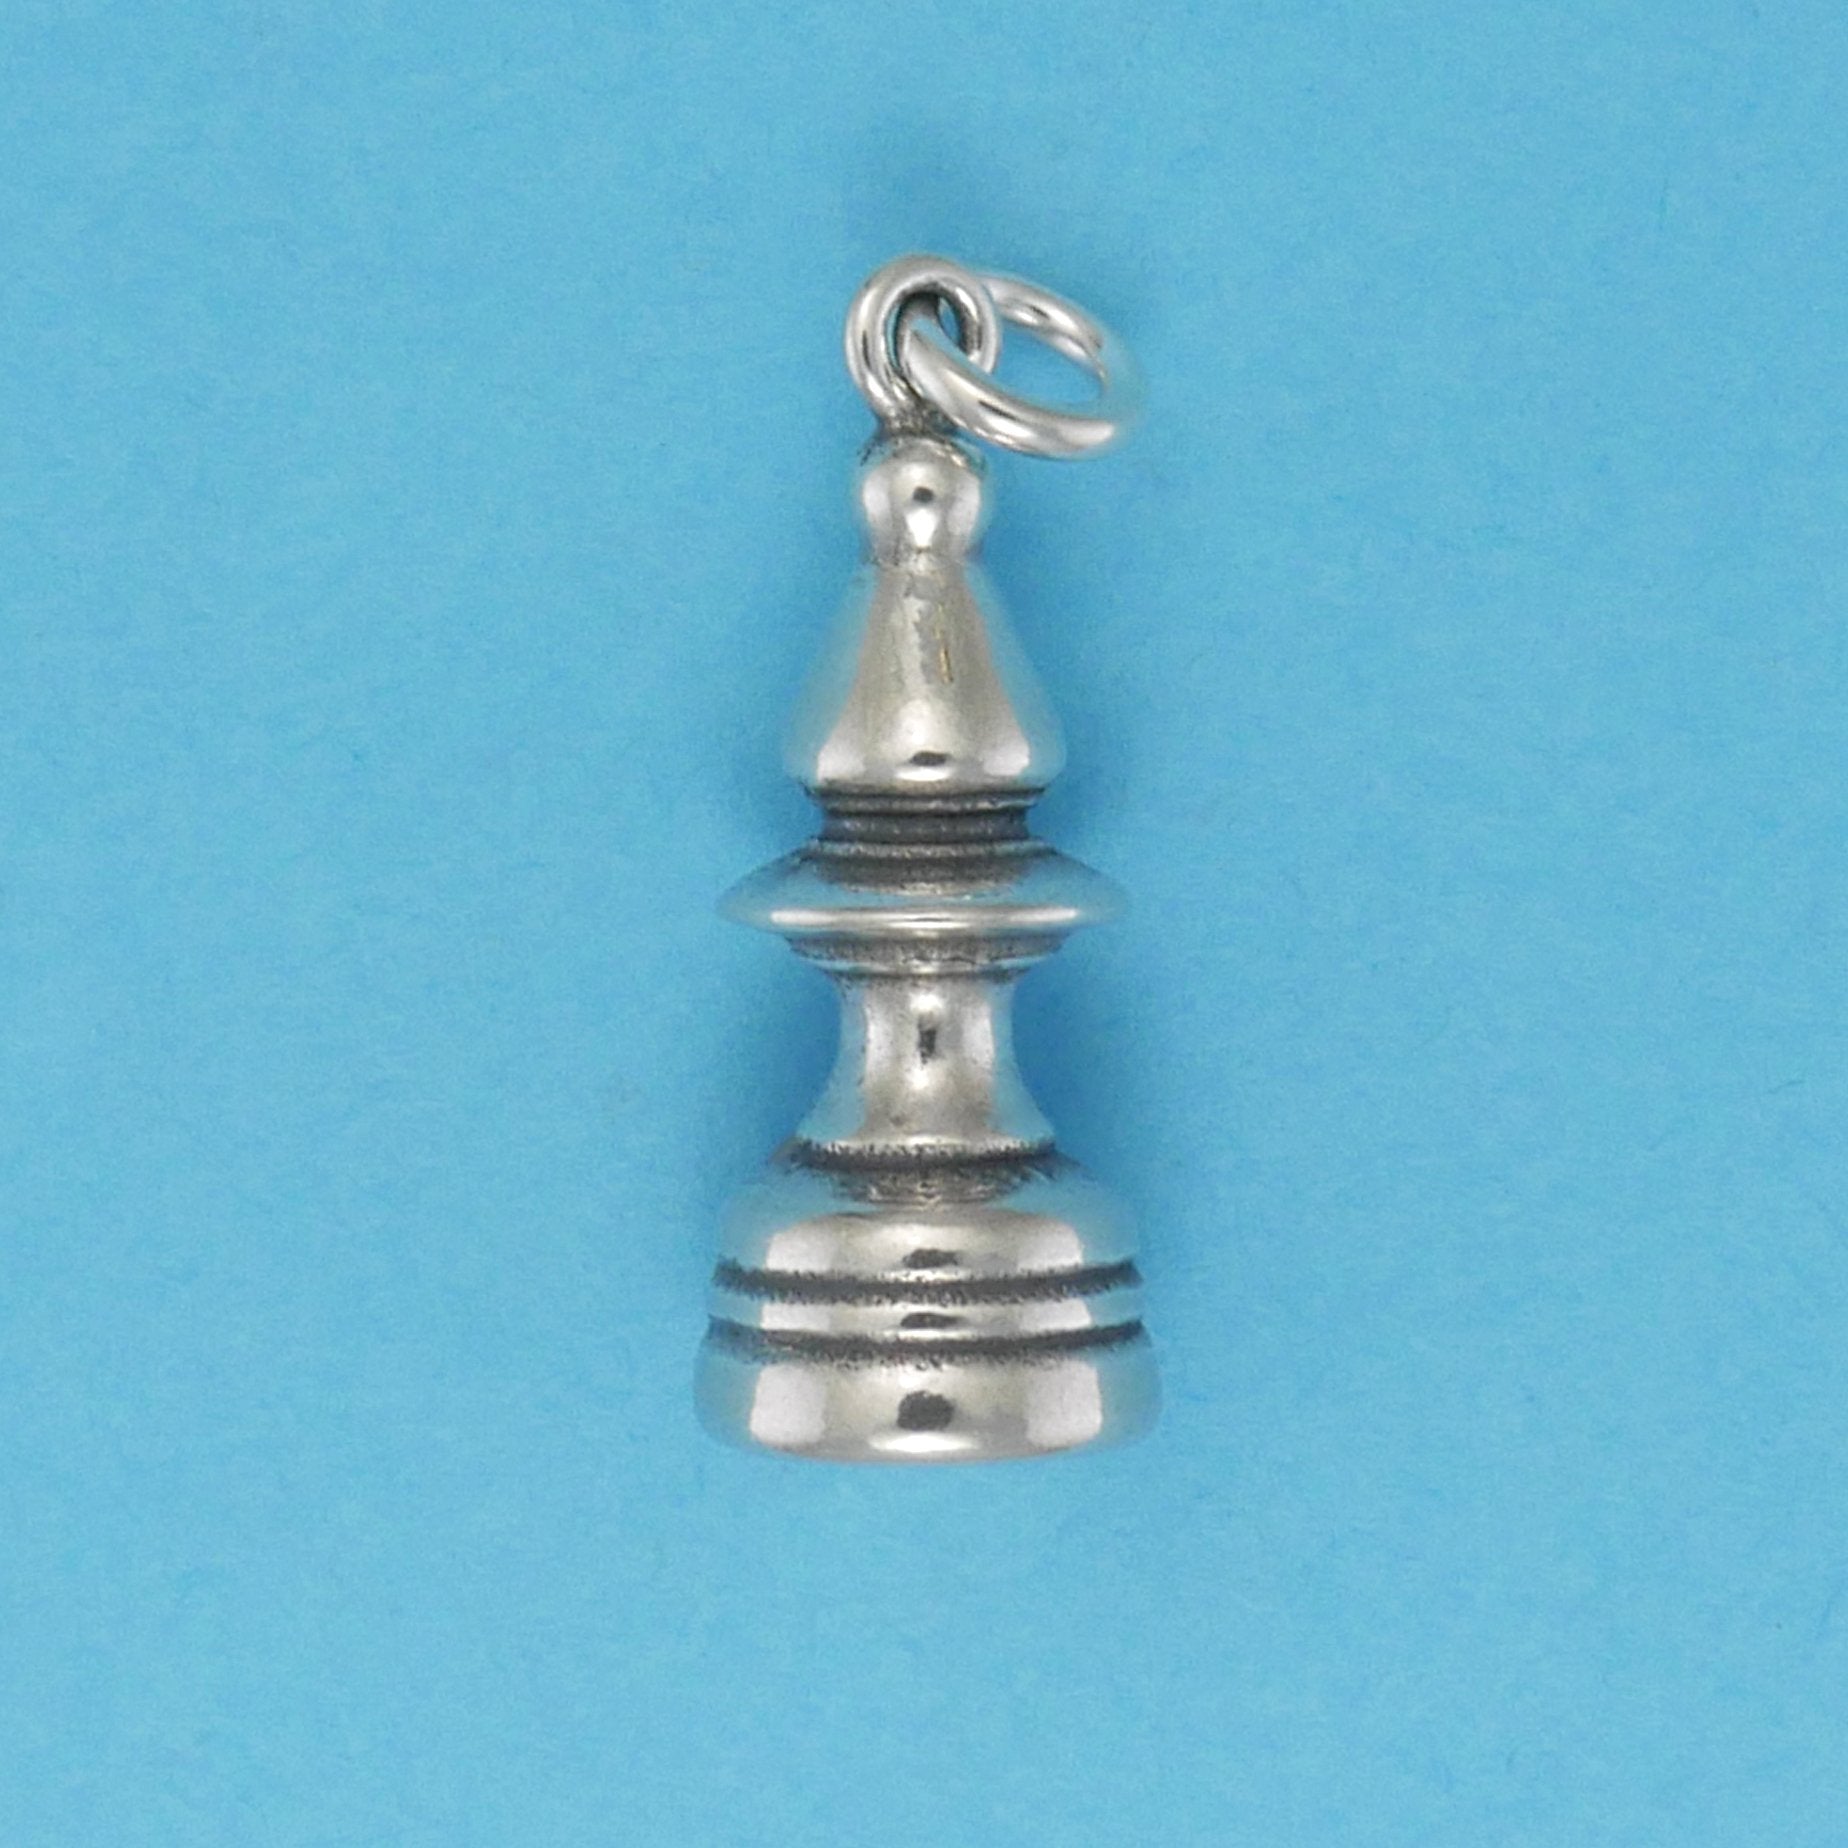 Bishop Chess Piece Charm - Charmworks